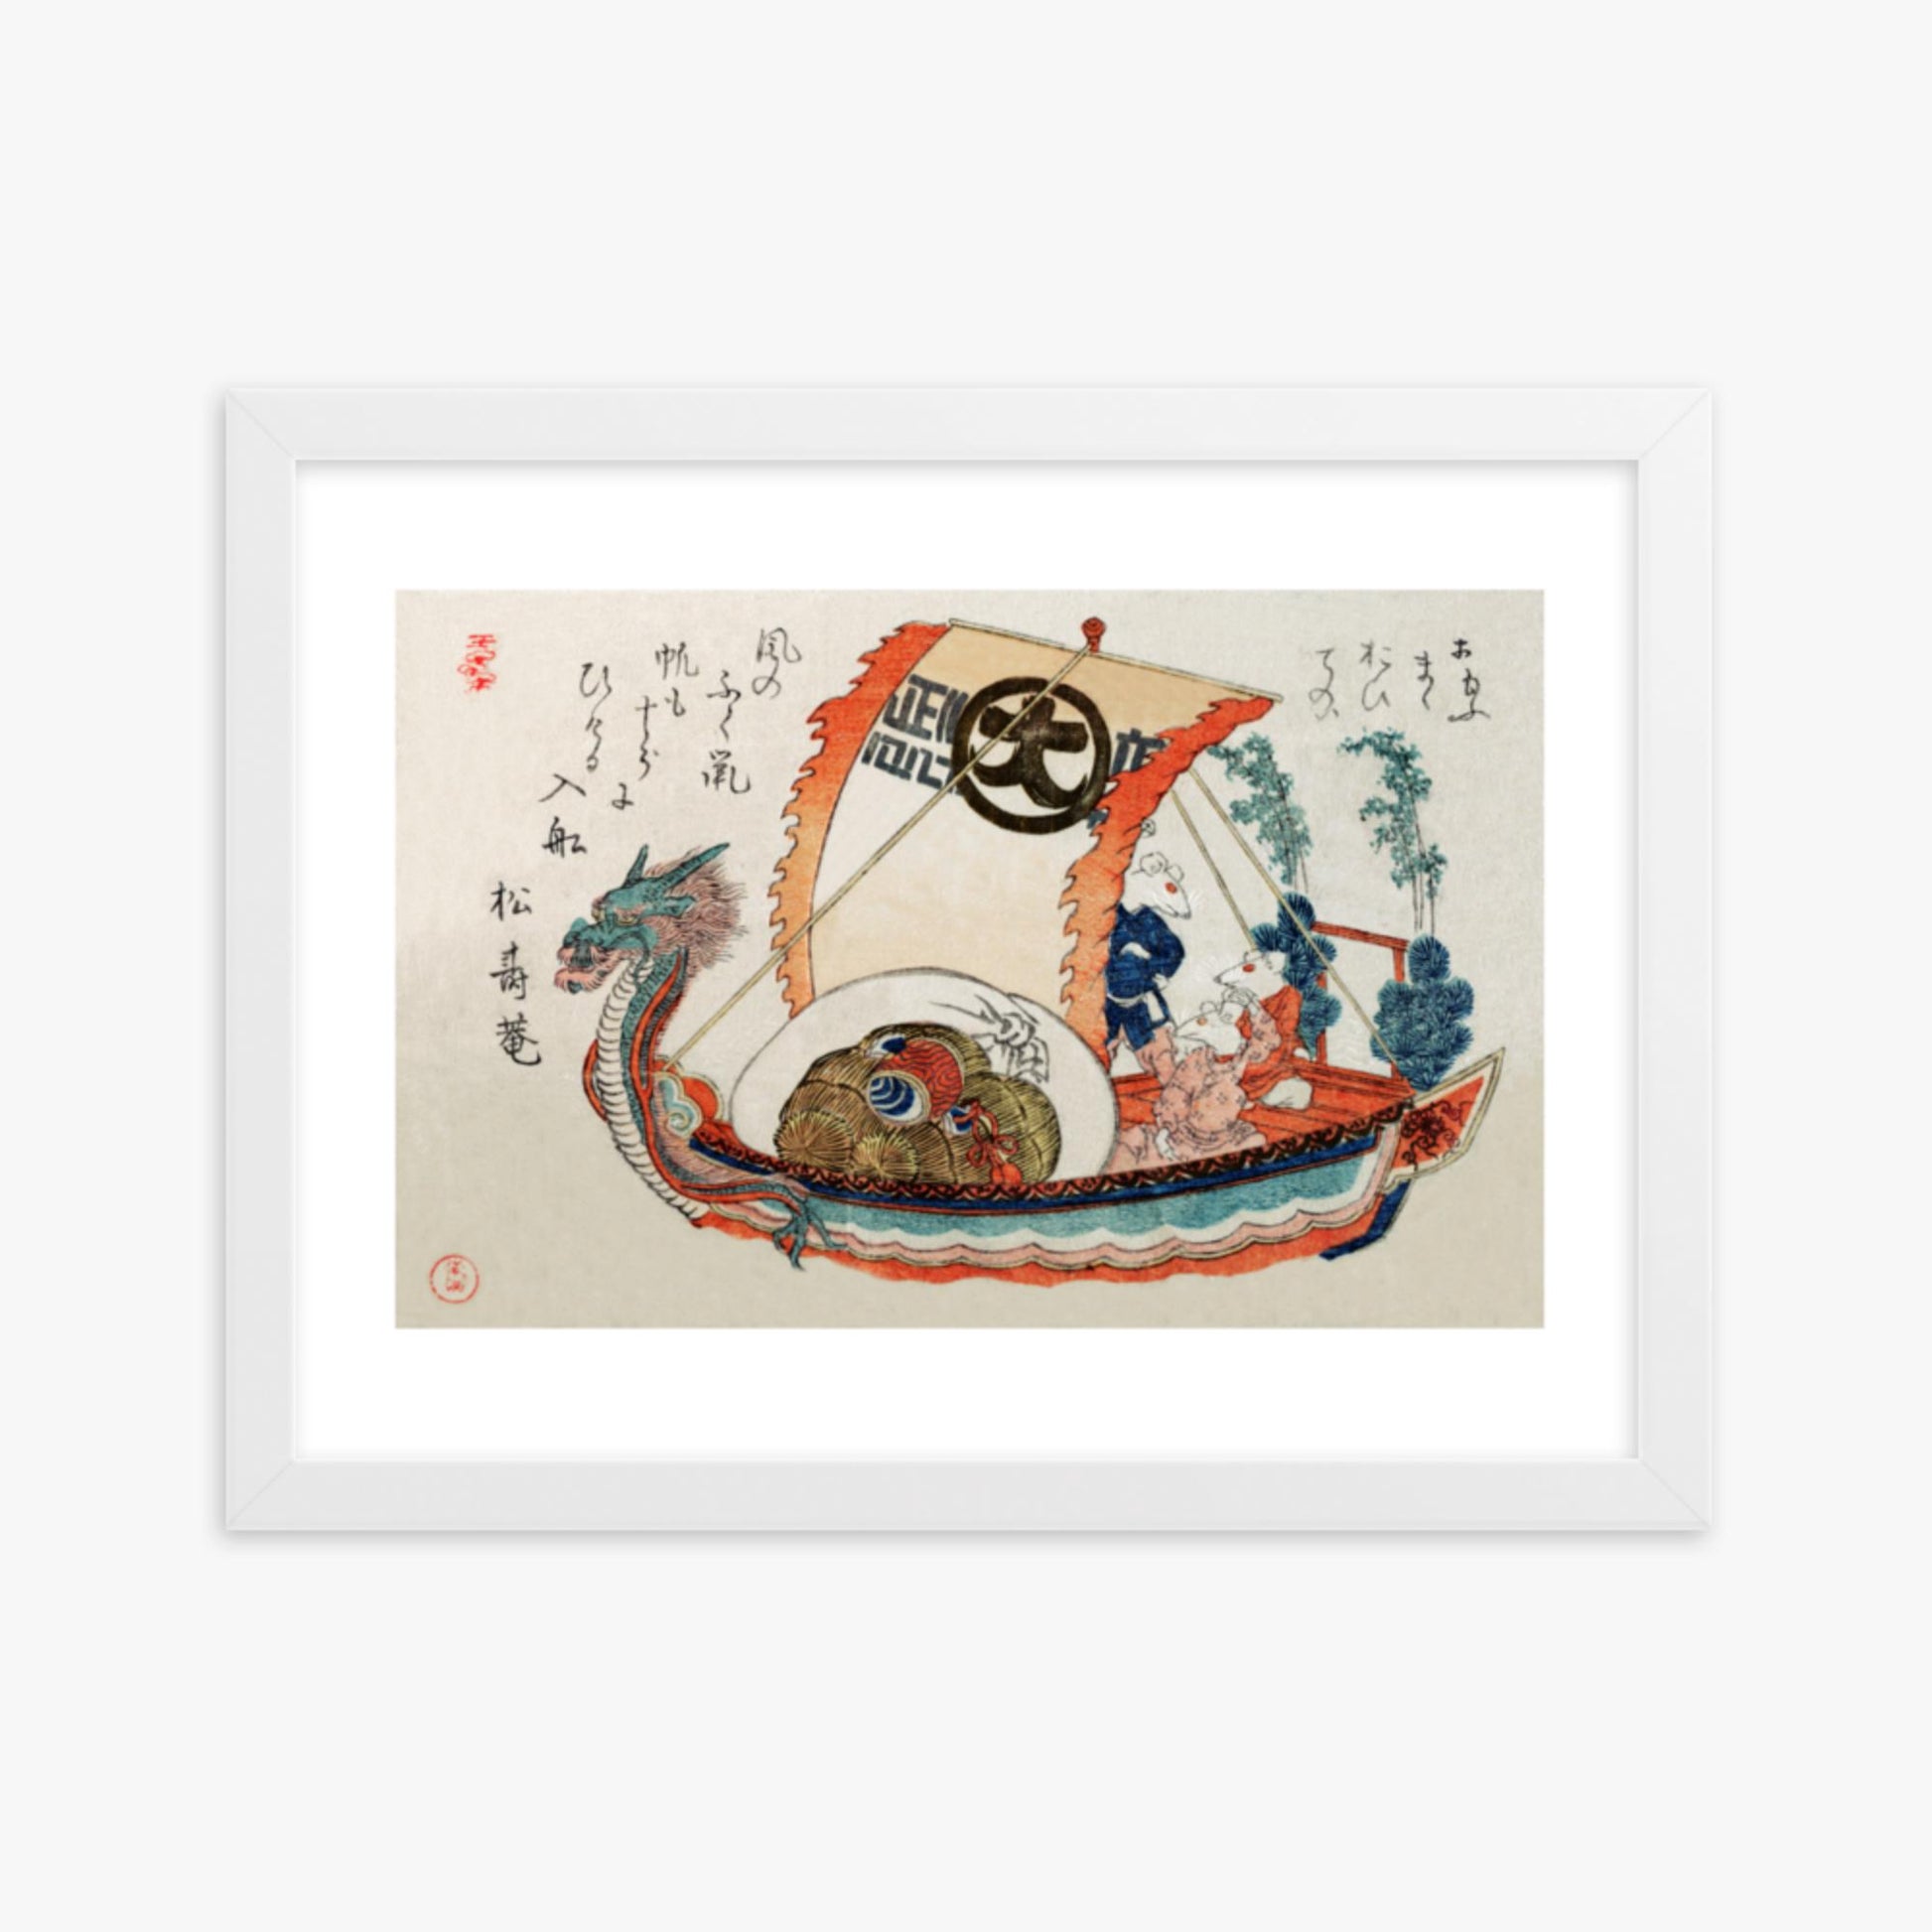 Kubo Shunman - Treasure Boat (Takara-bune) with Three Rats 30x40 cm Poster With White Frame